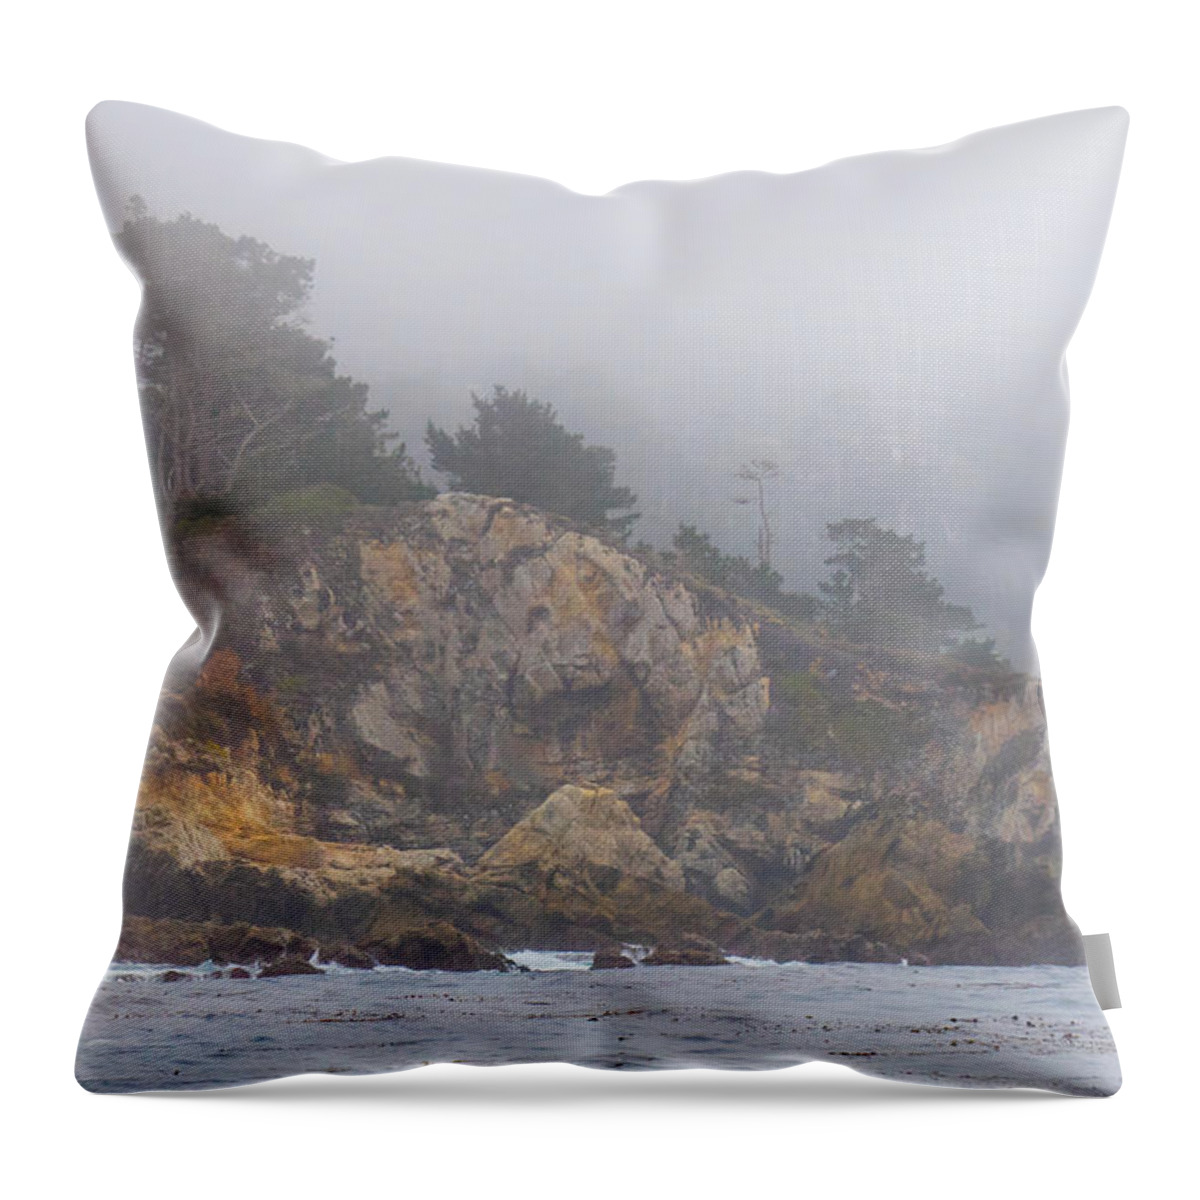 Fog Throw Pillow featuring the photograph Foggy Day at Point Lobos by Derek Dean